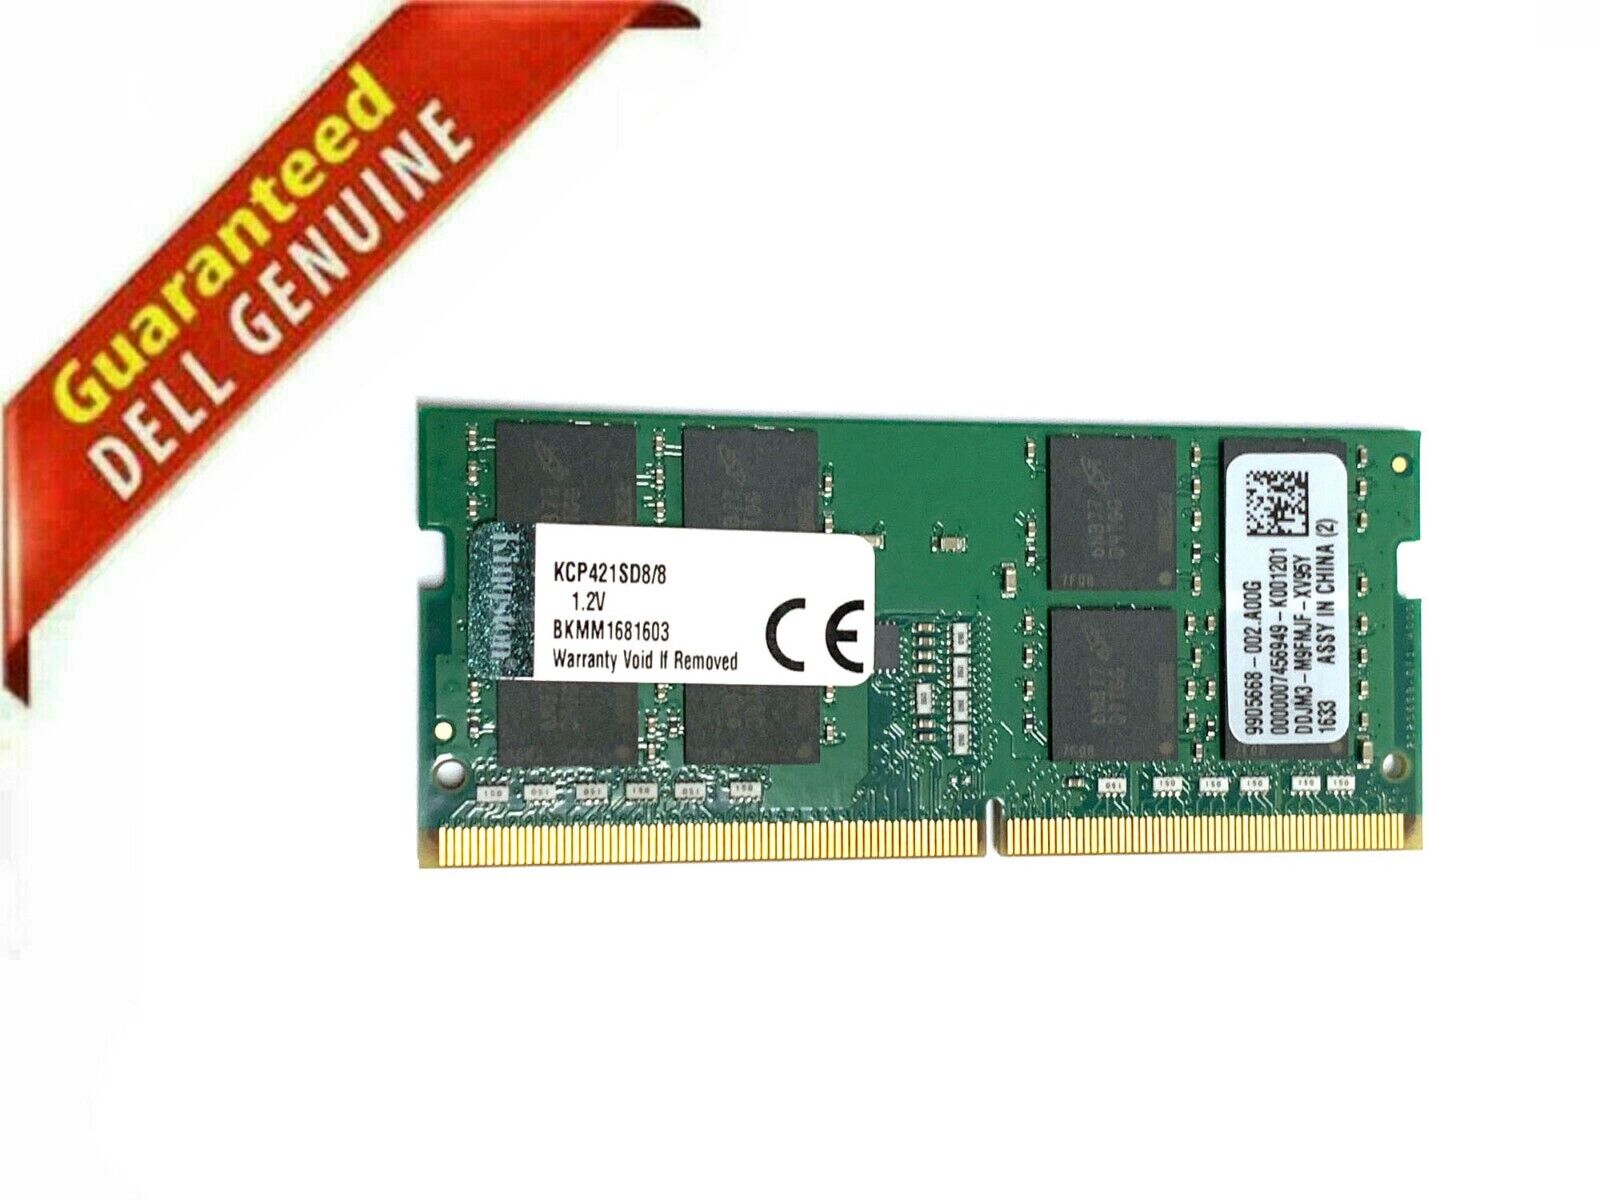 Dell DG29K Alienware M14 4 GB Memory RAM DDR3 NWMX1 204PIN  NIA01 TRA01